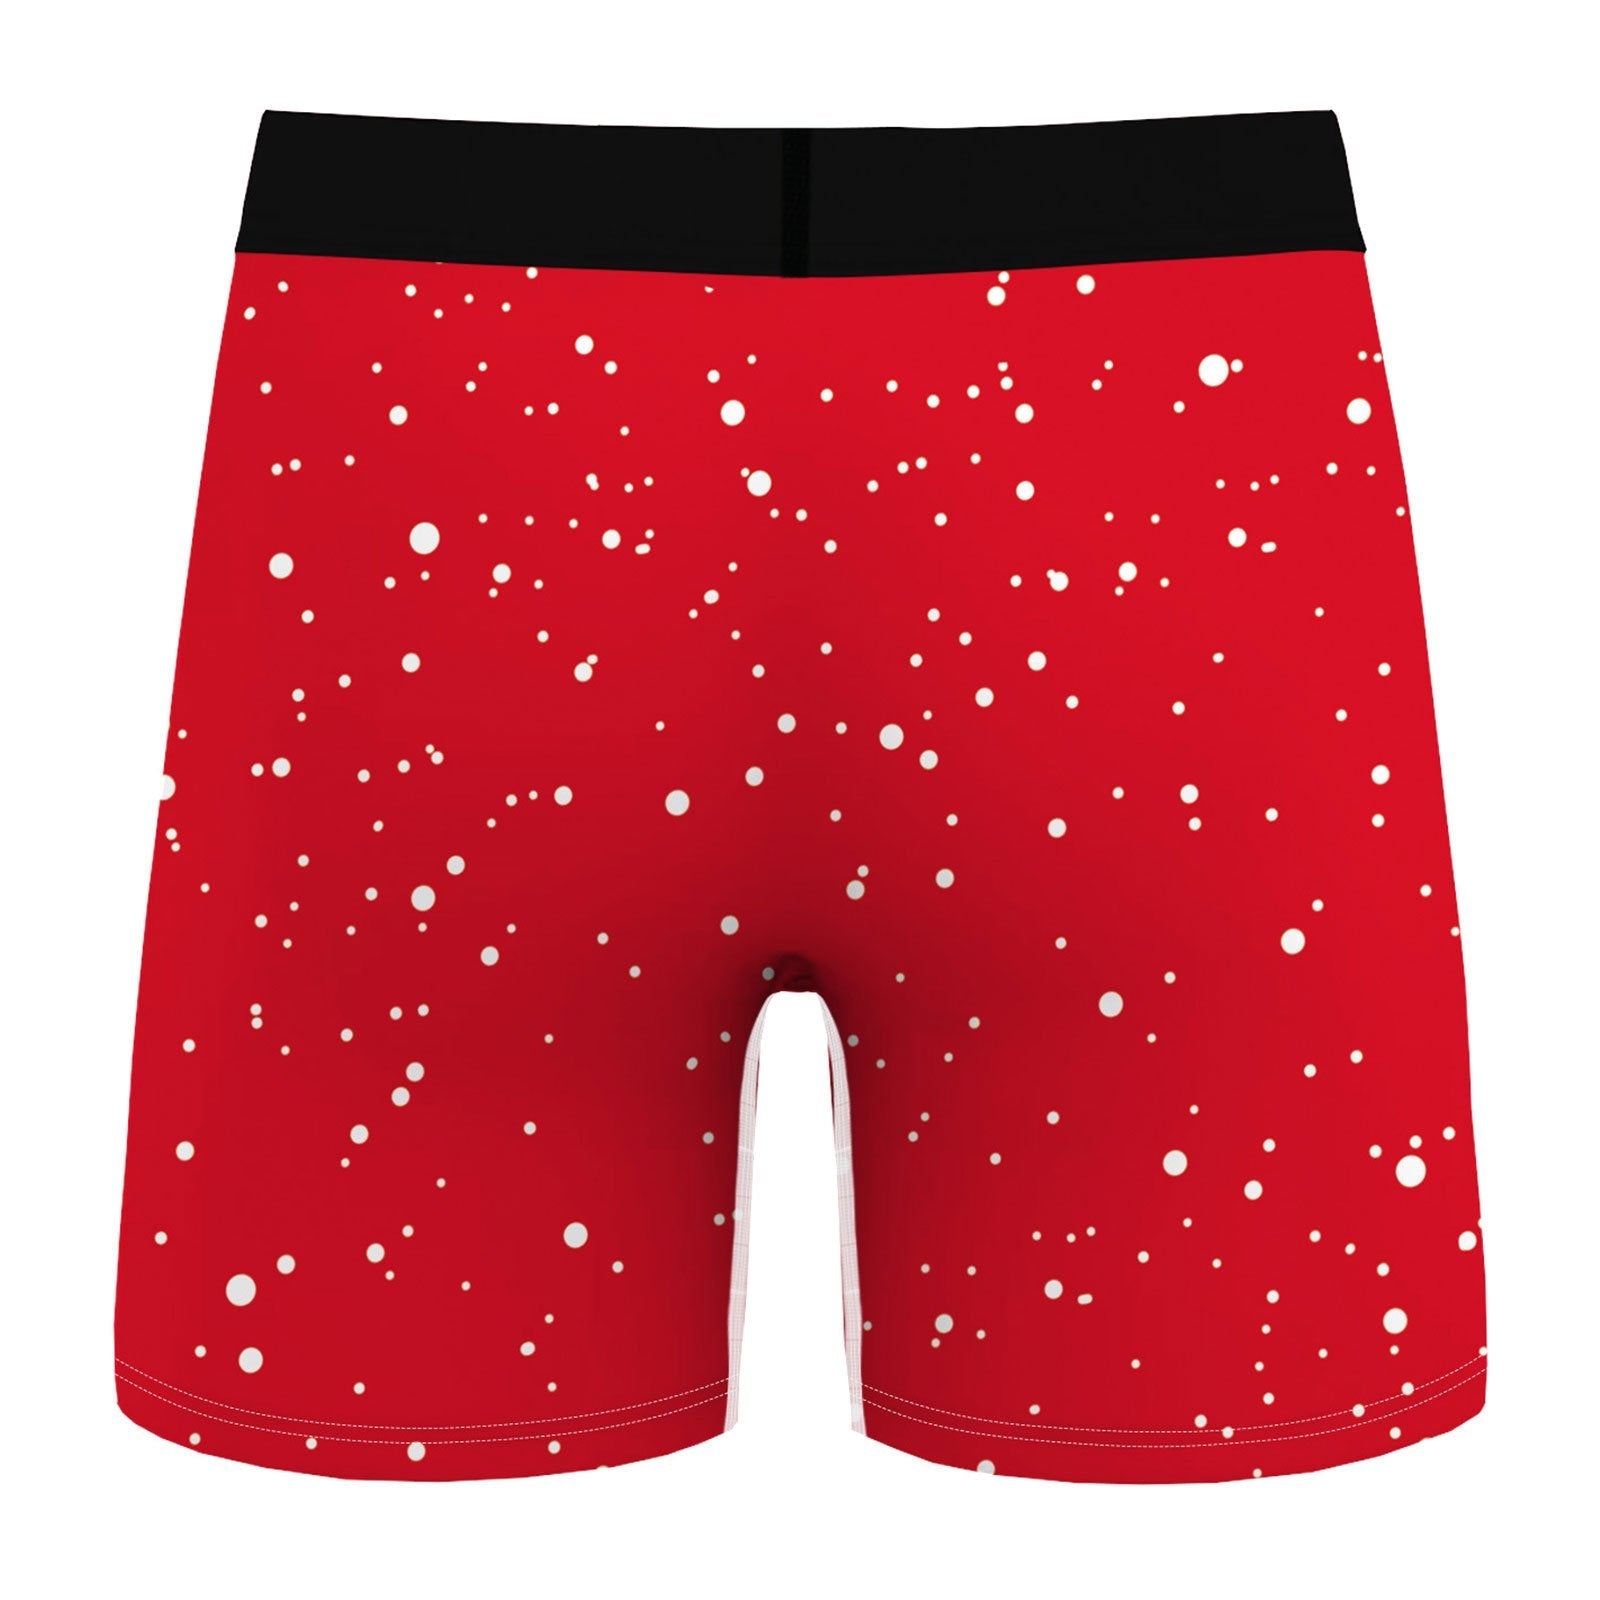 SALE - XMAS GIFT - Mens Christmas Printed Boxer Shorts Holiday Underwear